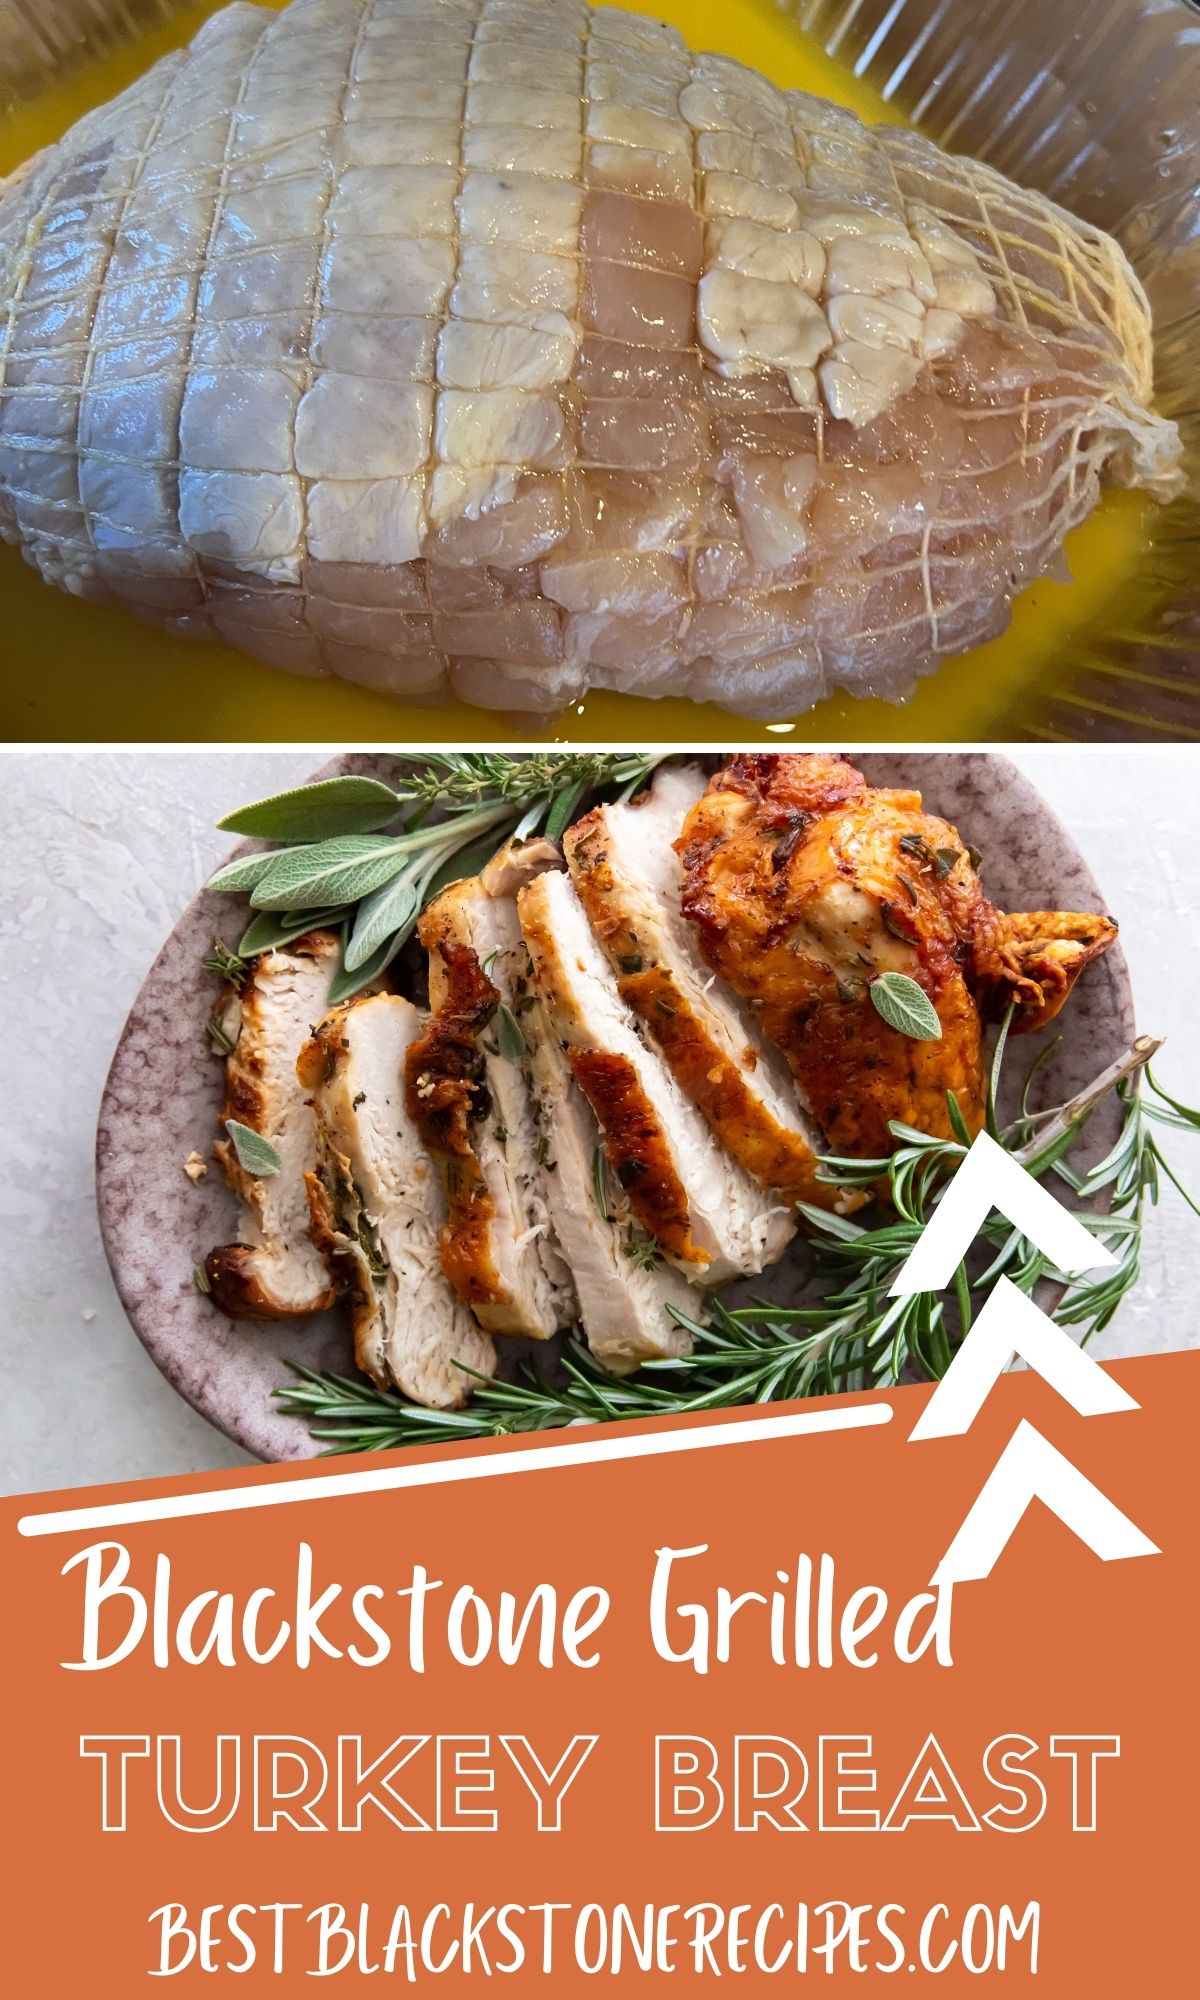 Blackstone grilled turkey breast.